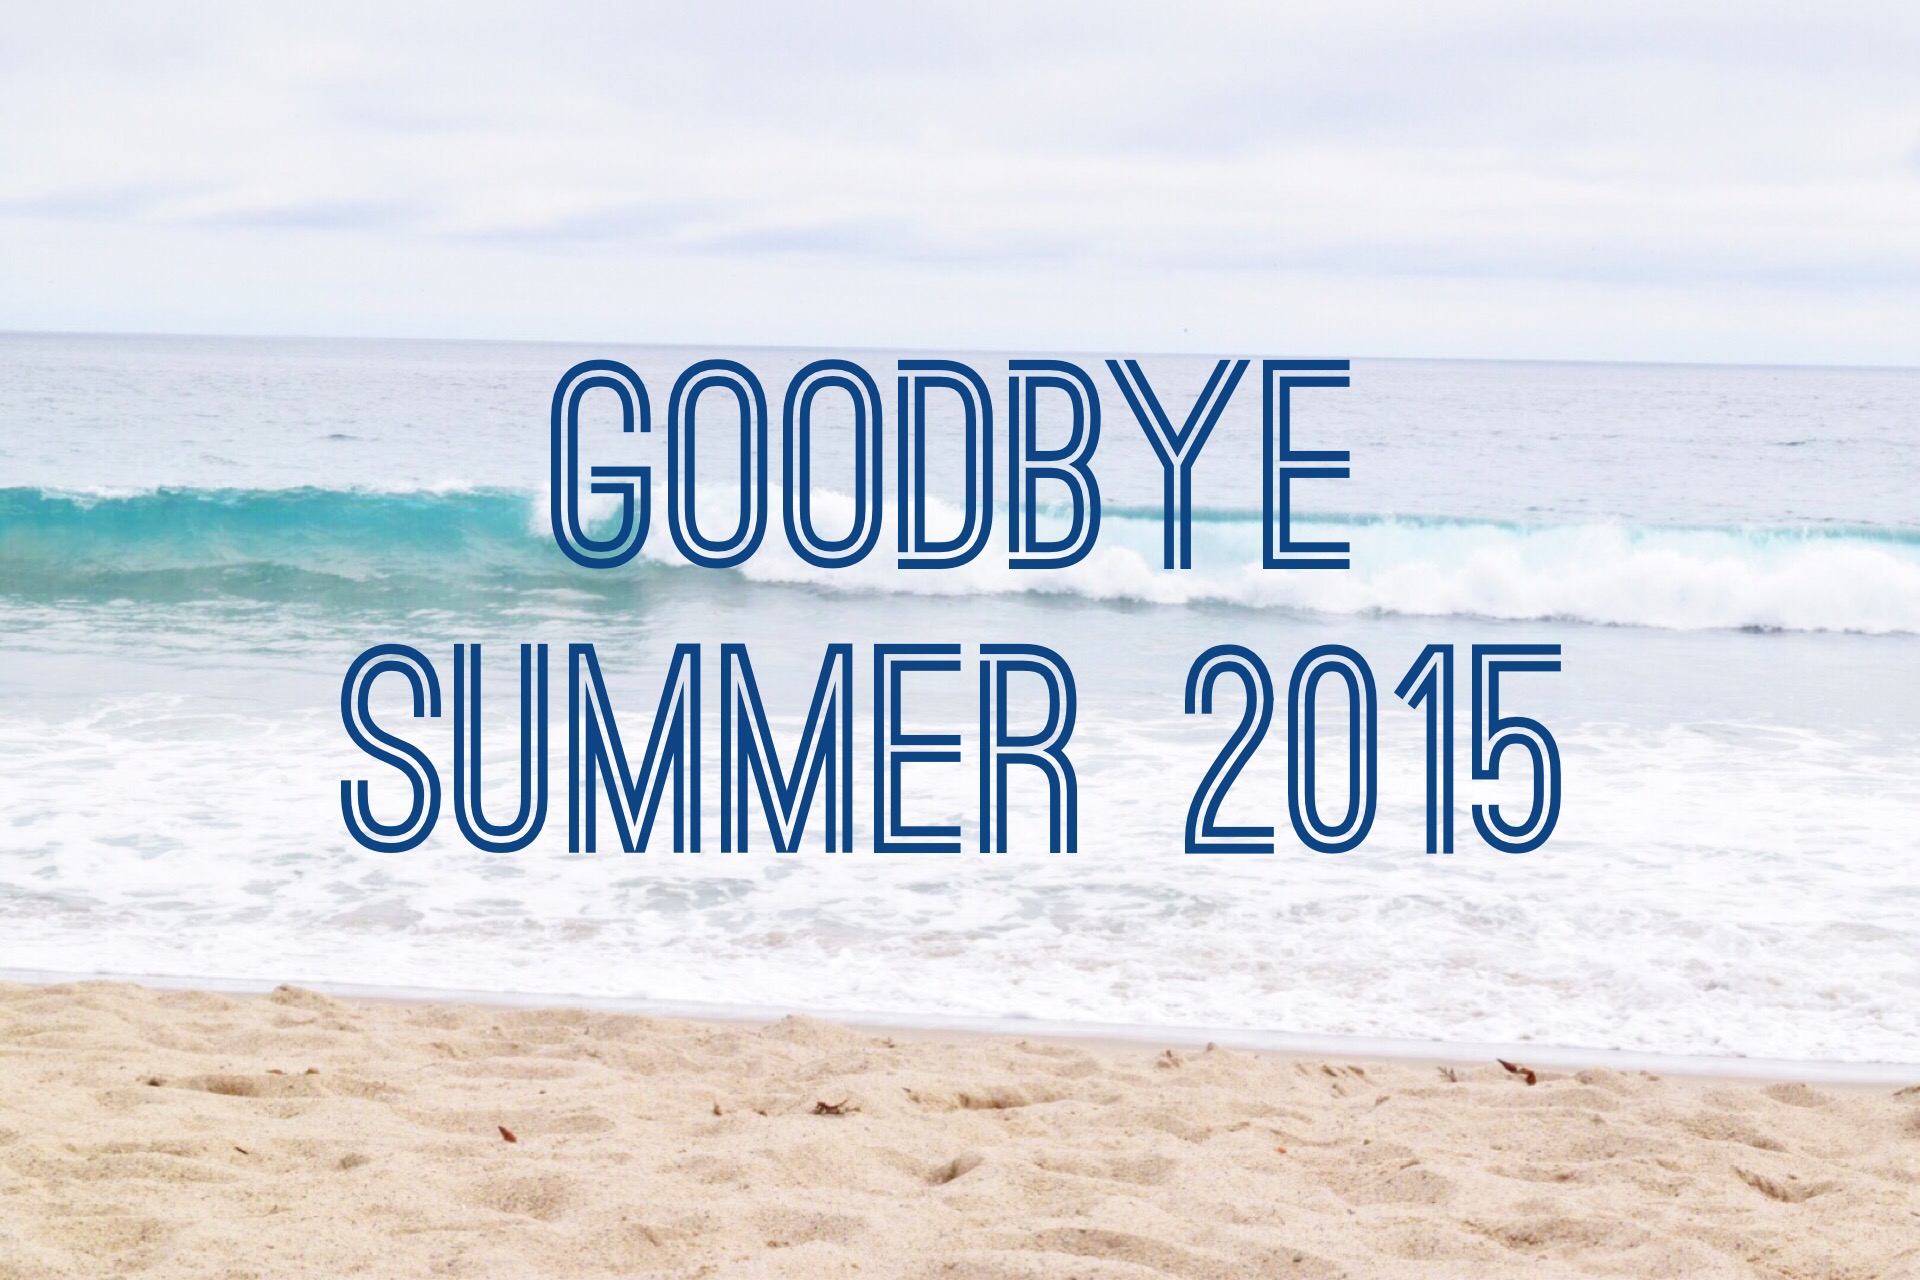 Goodbye Summer 2015!